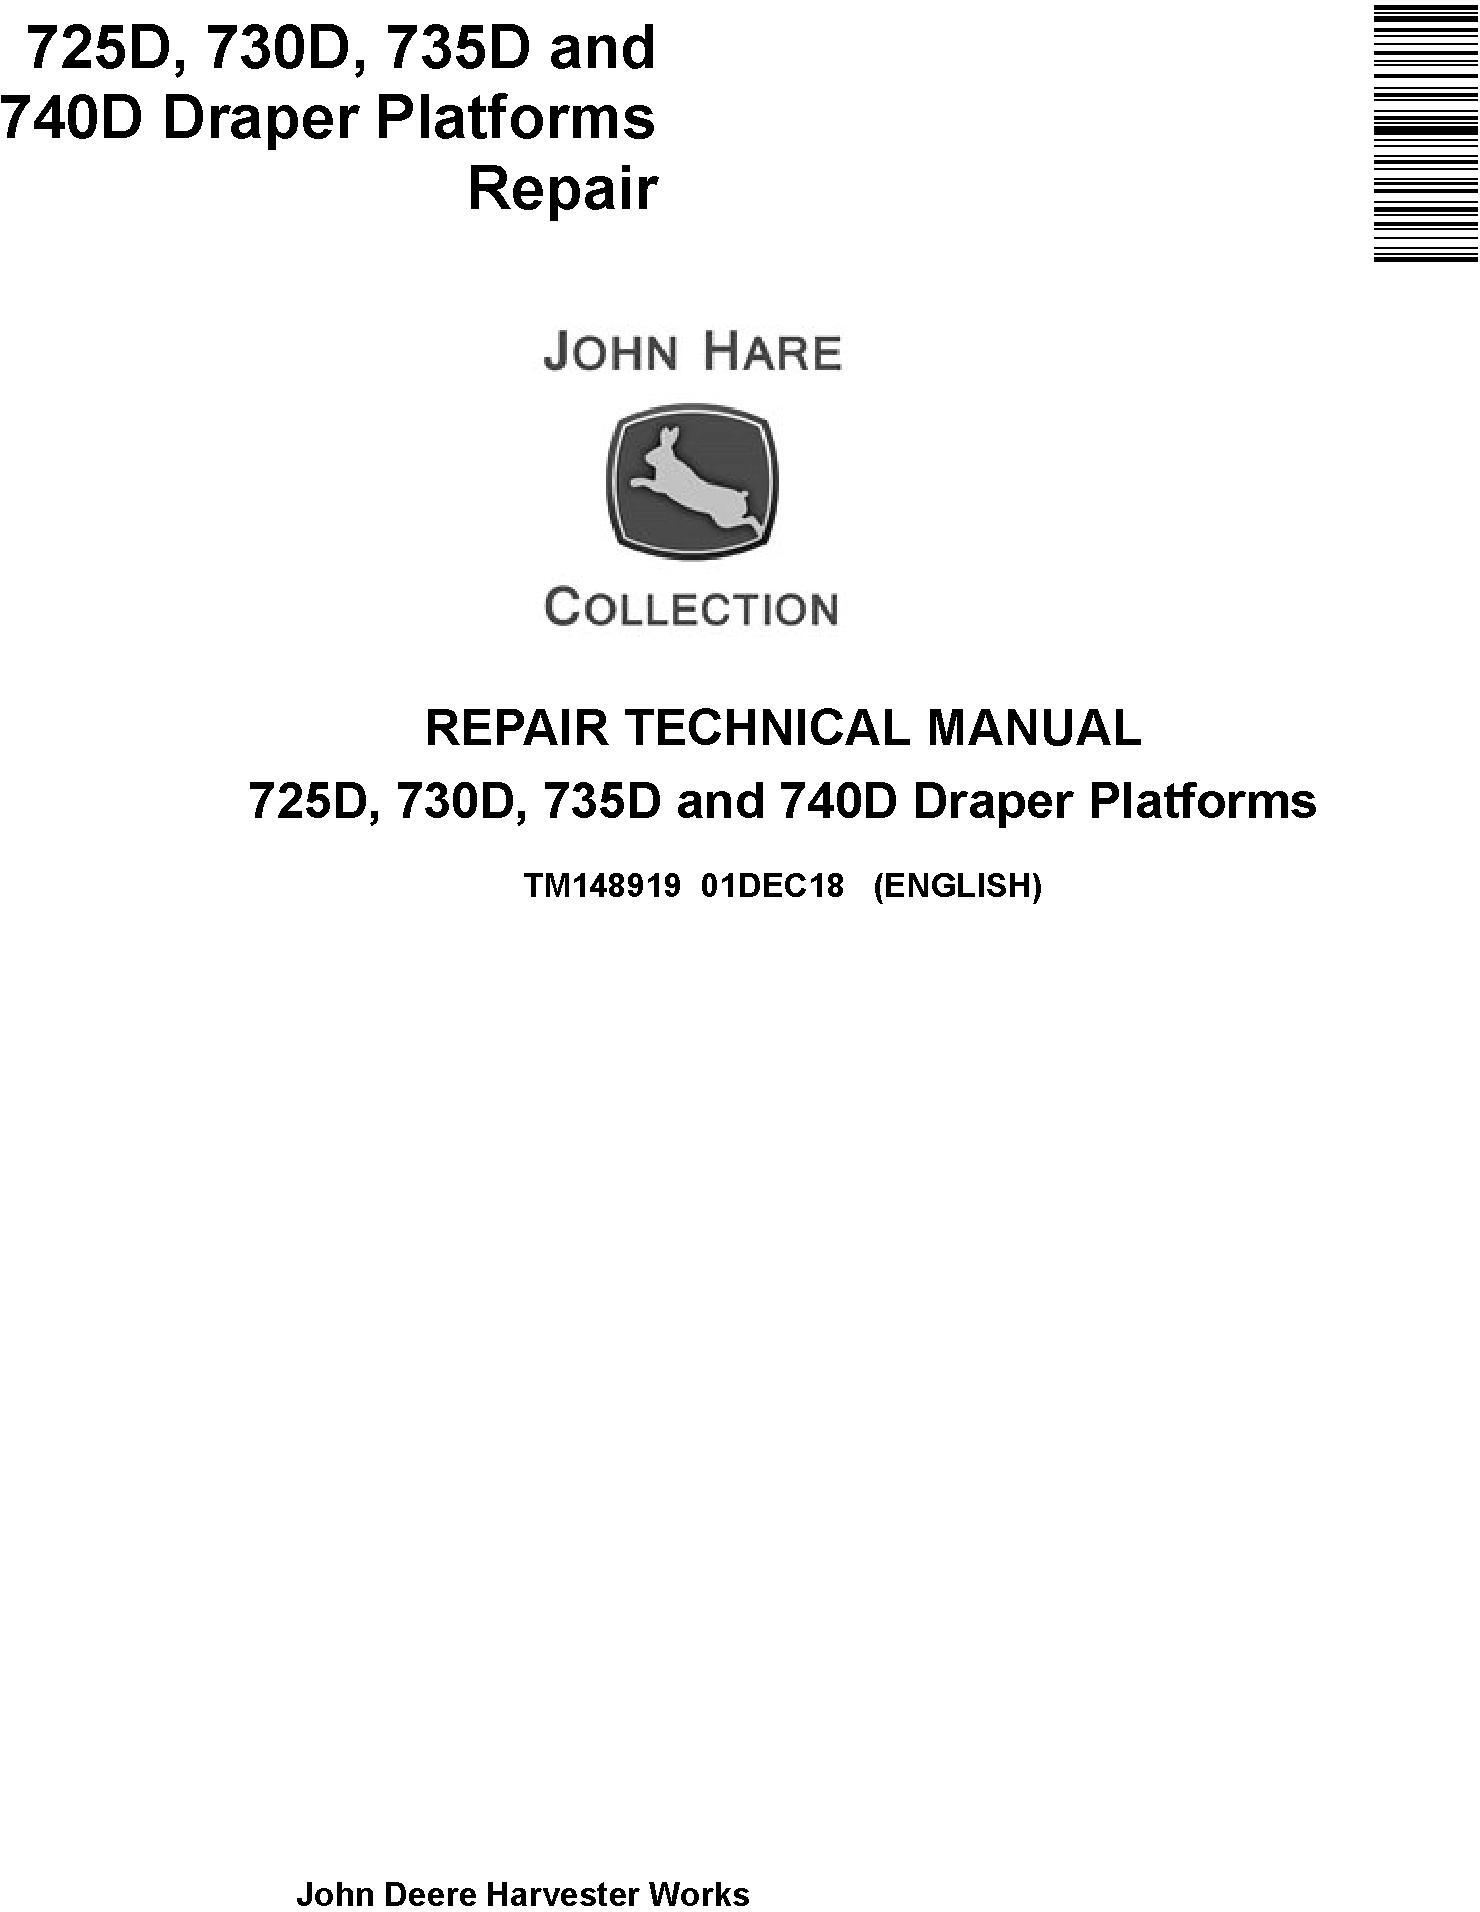 John Deere 725D, 730D, 735D and 740D Draper Platforms Repair Technical Service Manual (TM148919) - 19281